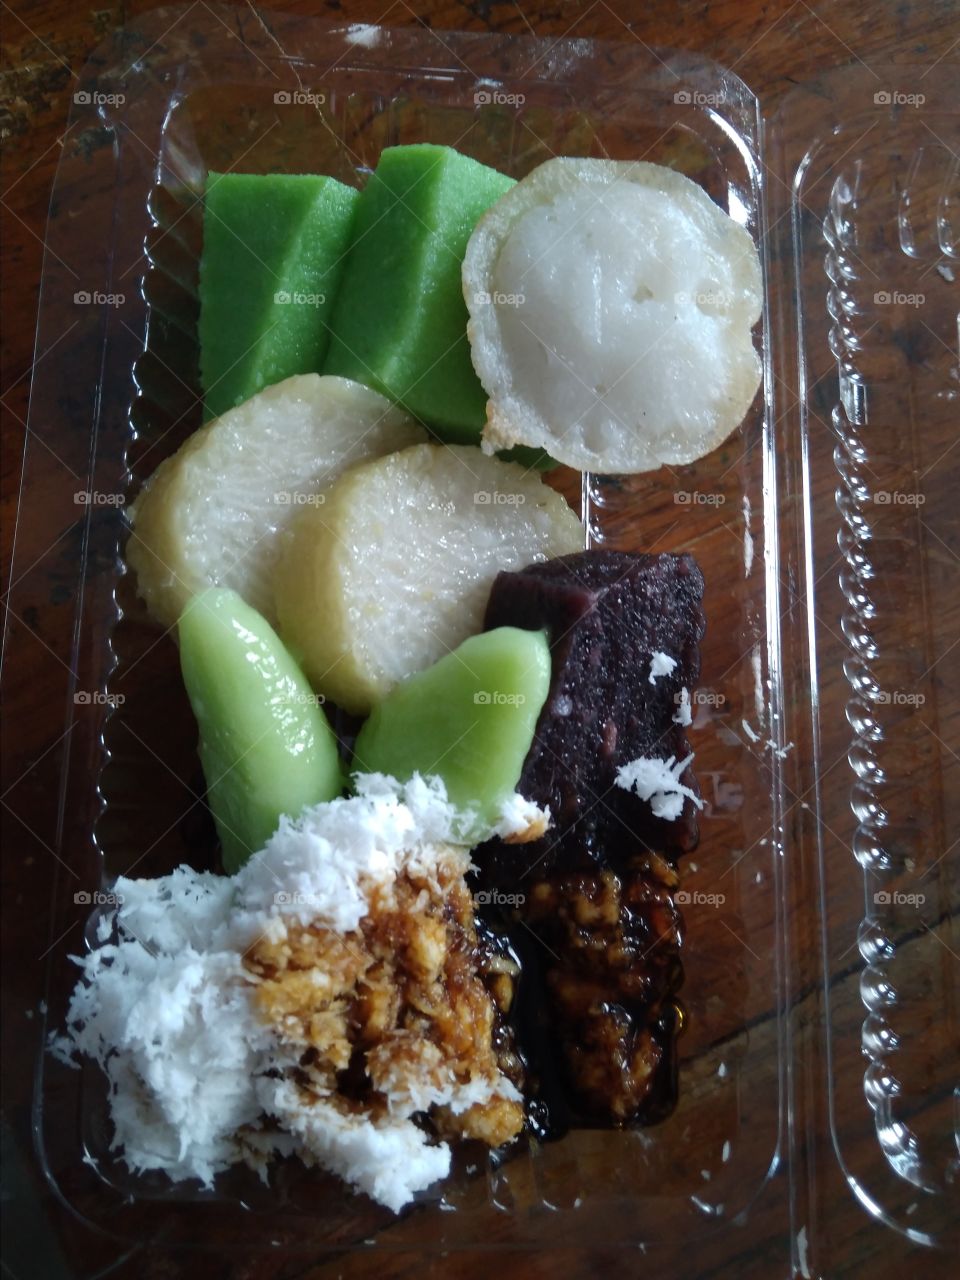 Klaudan, lupis, serabi, sweet from Lombok Nusa Tenggara Barat